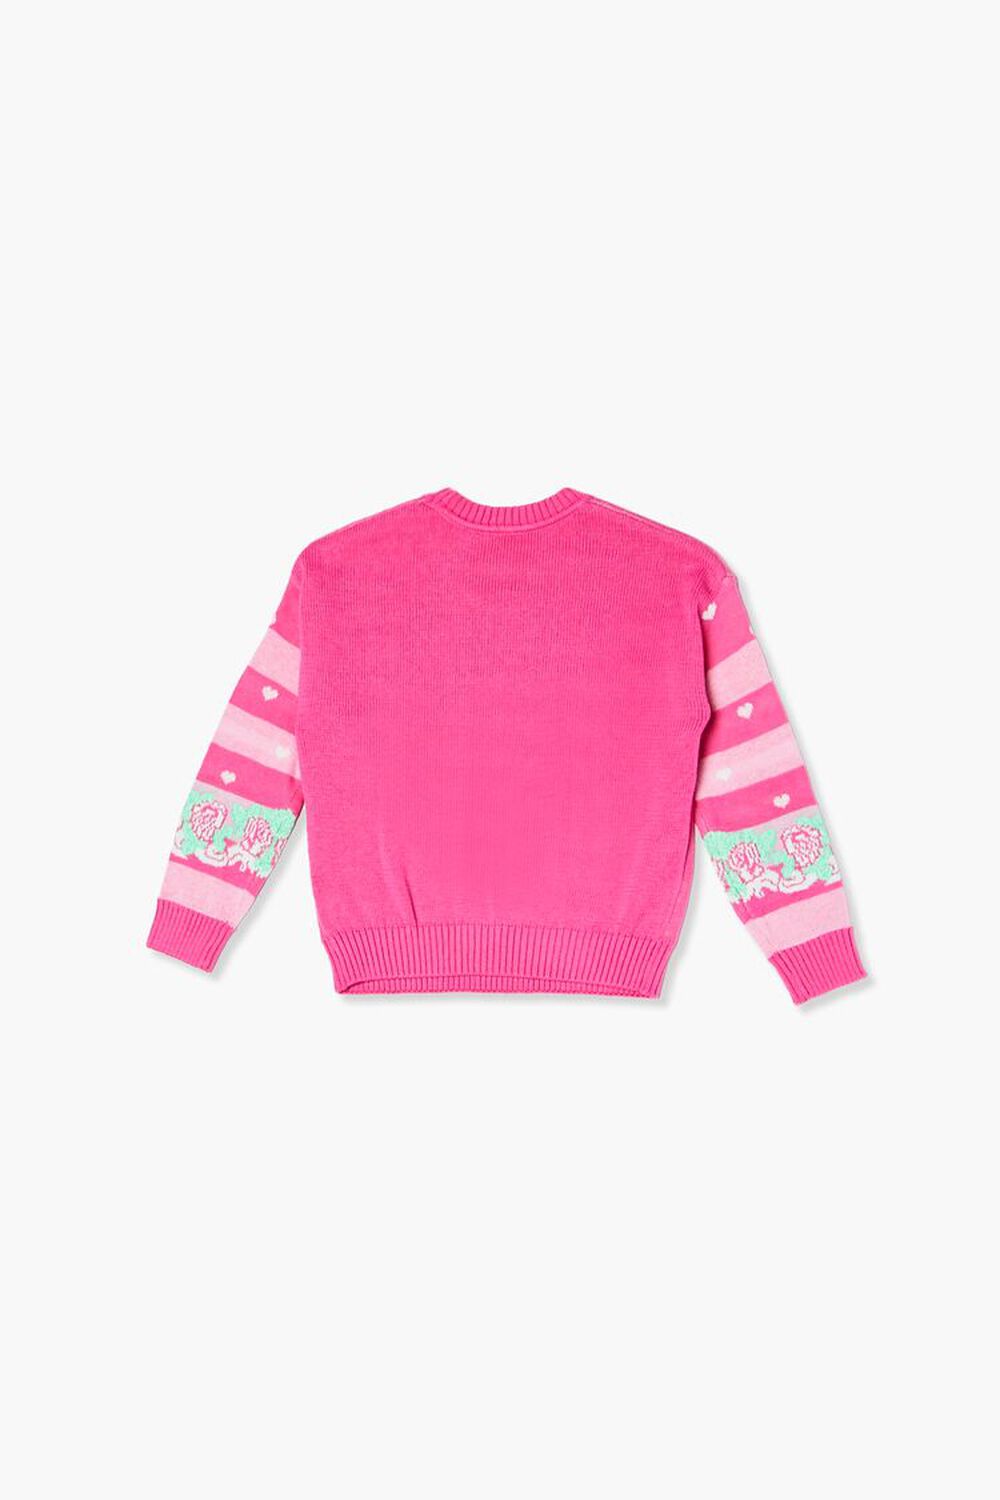 PINK/MULTI Girls Barbie Graphic Sweater (Kids), image 2